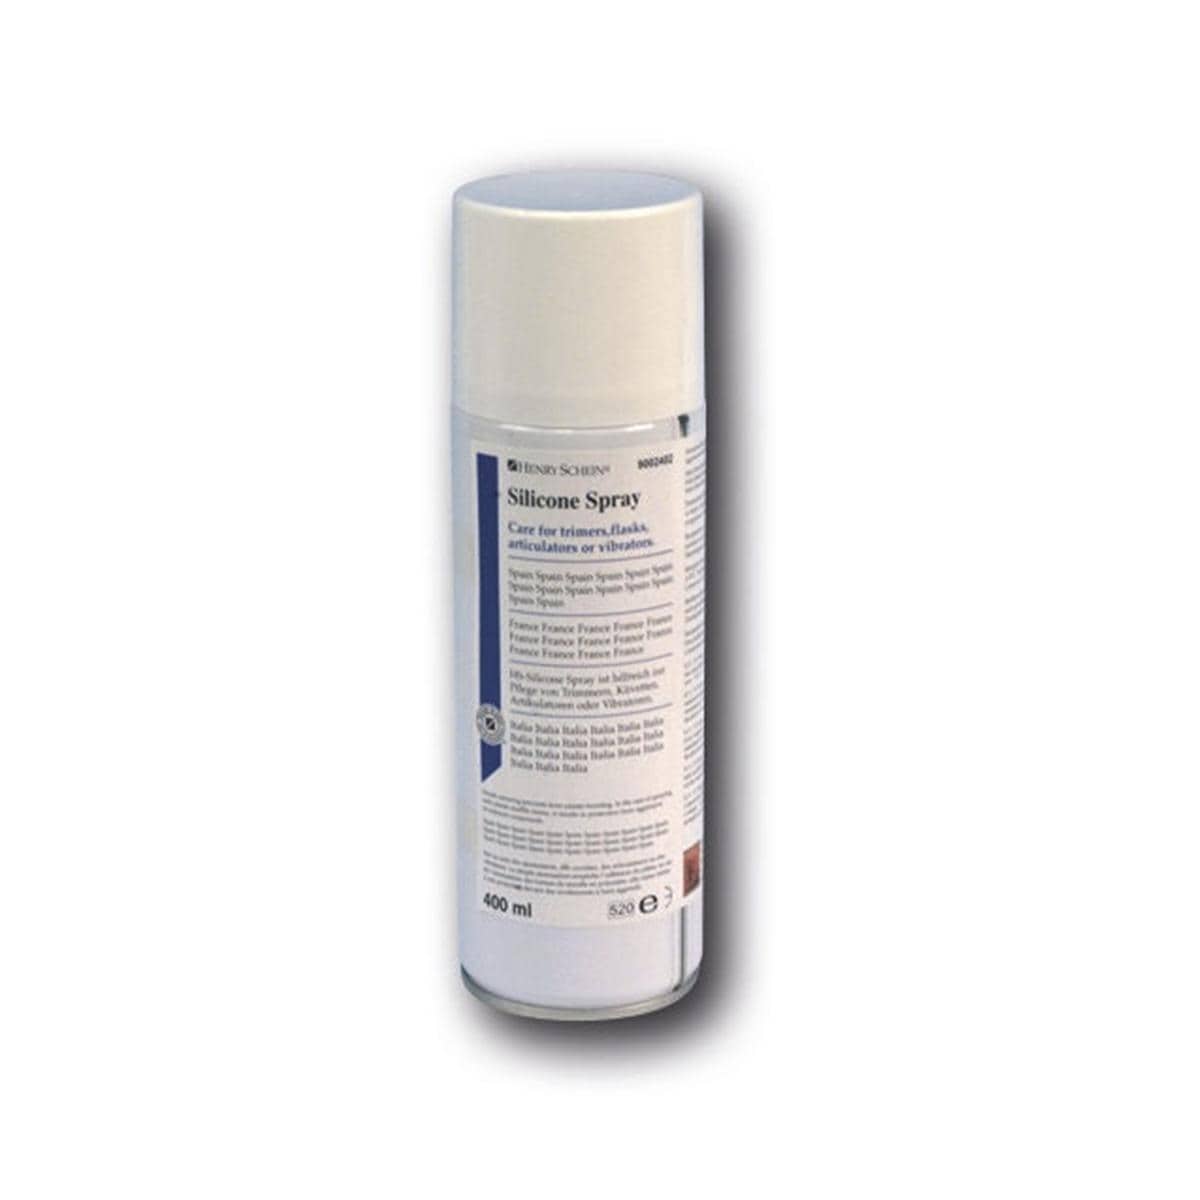 HS-Silikonspray, Silicone Spray - Dose 400 ml